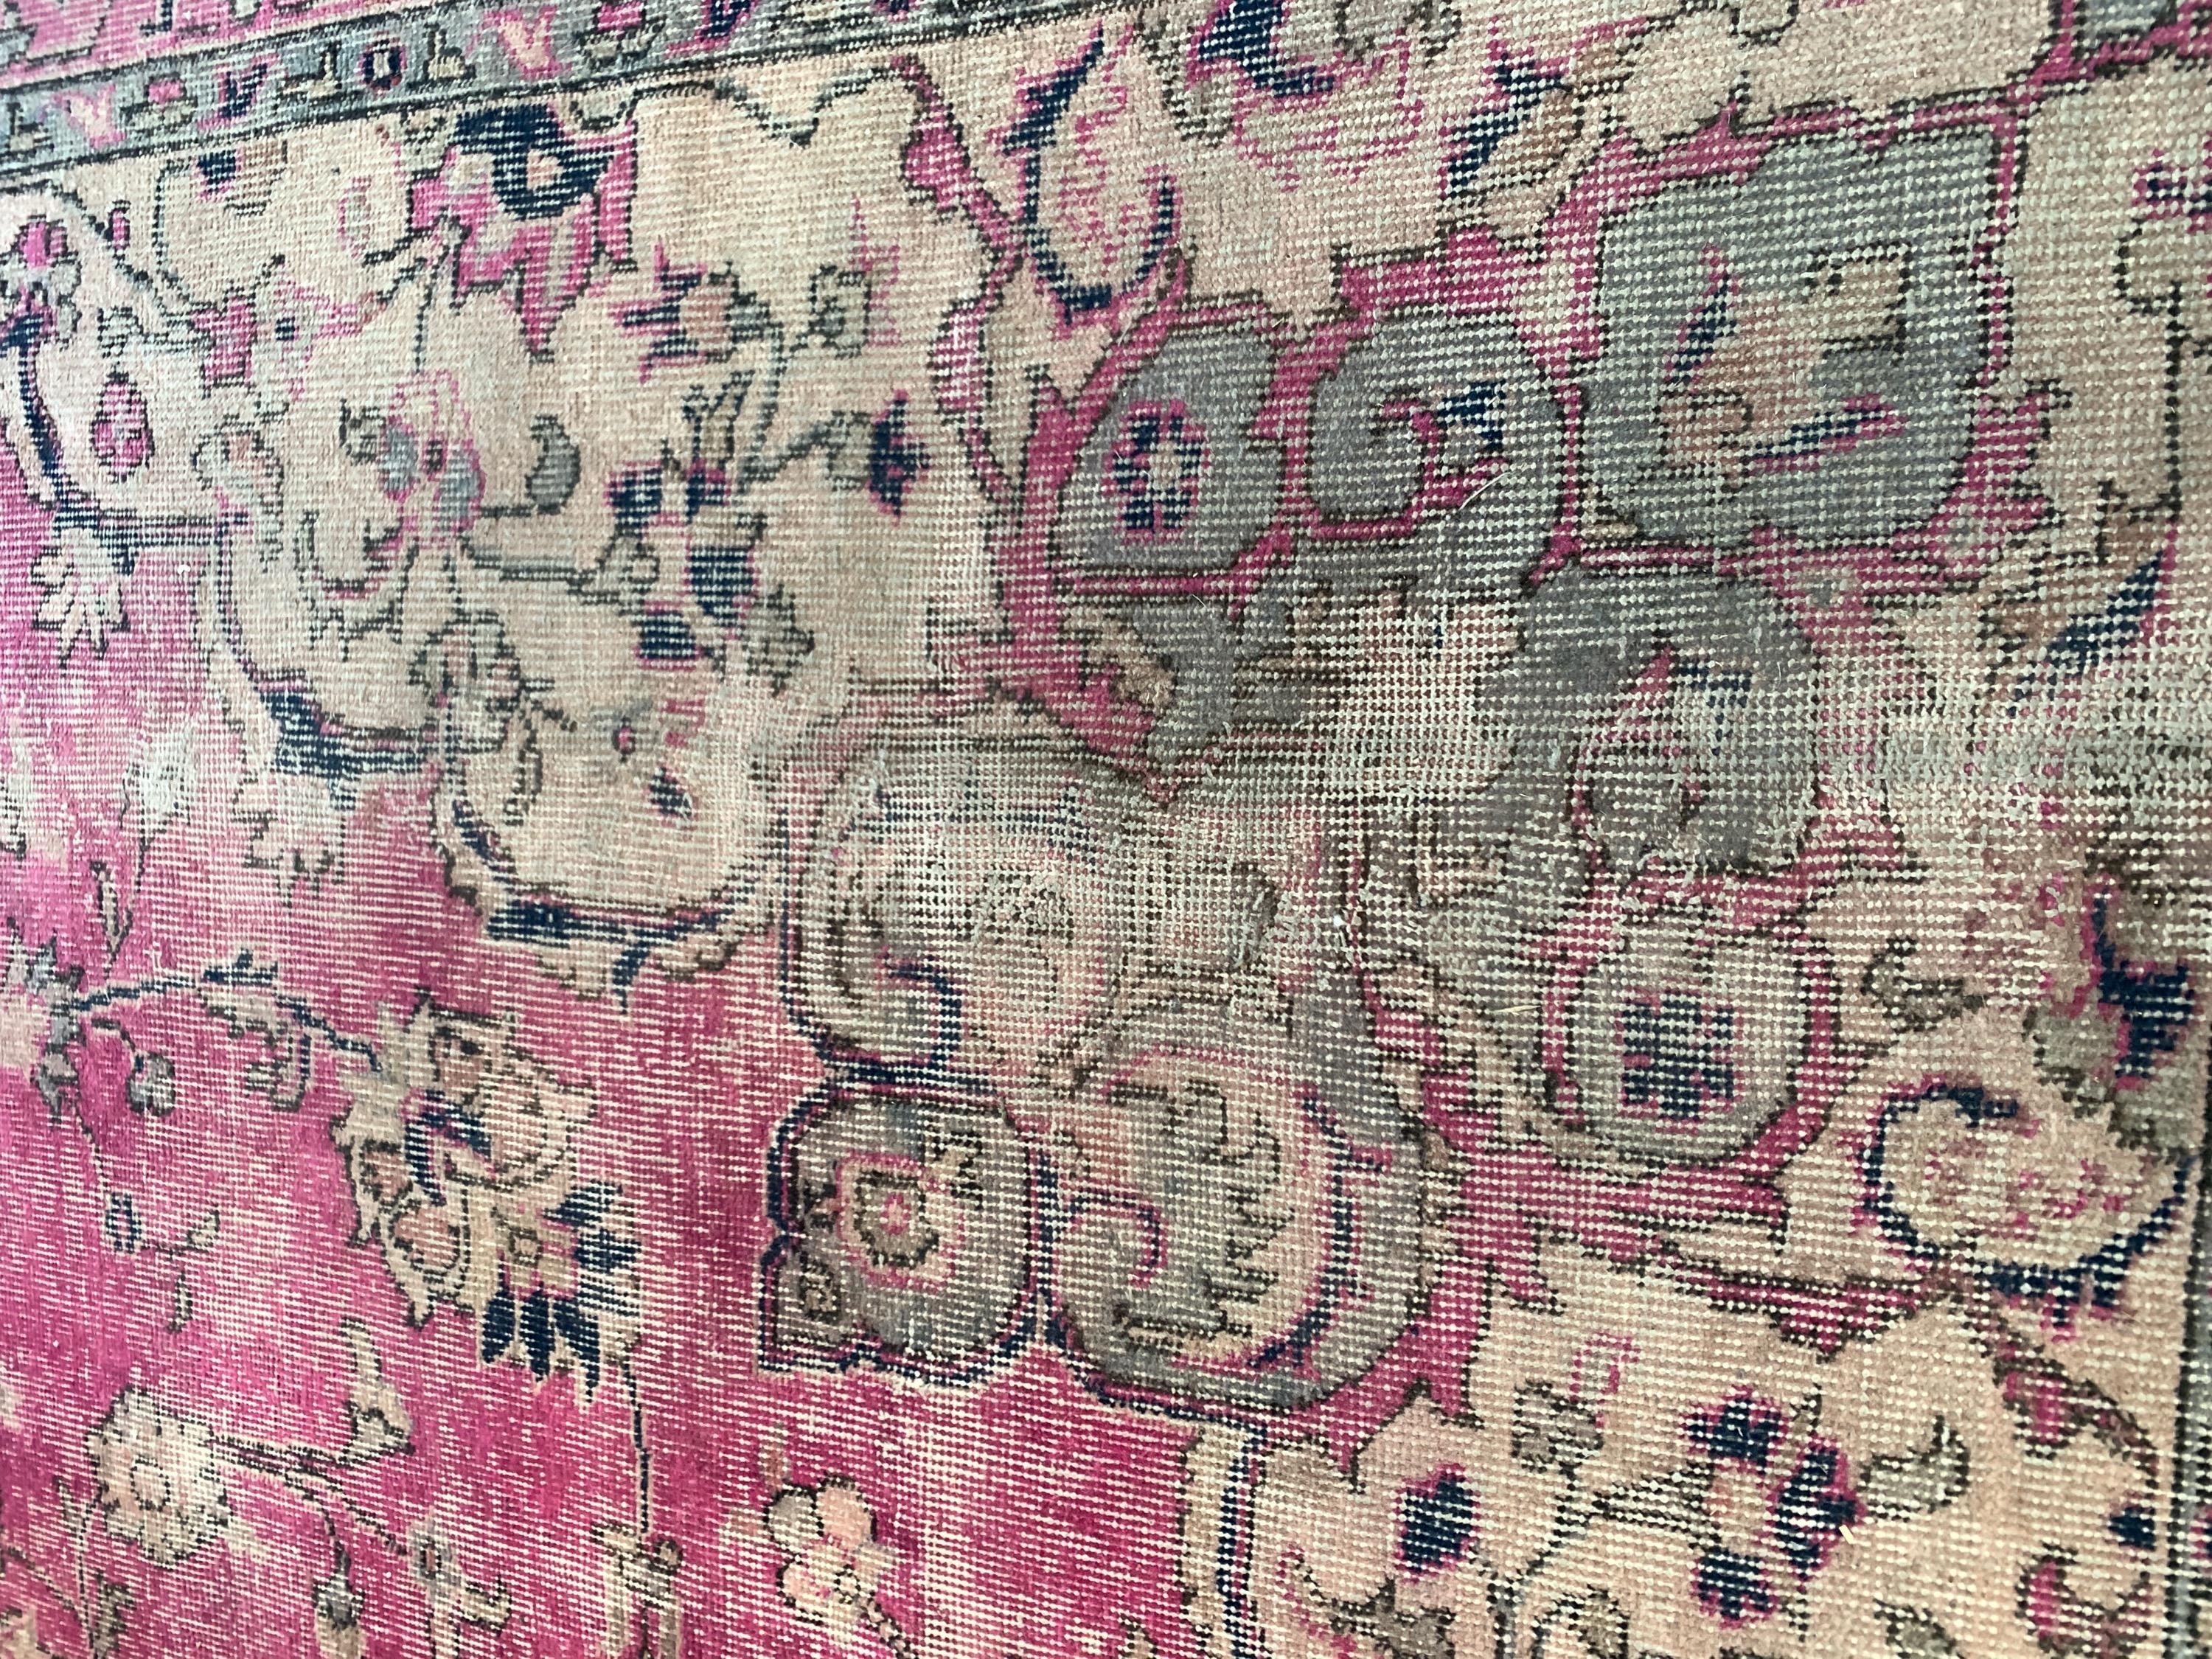 oversized persian rugs